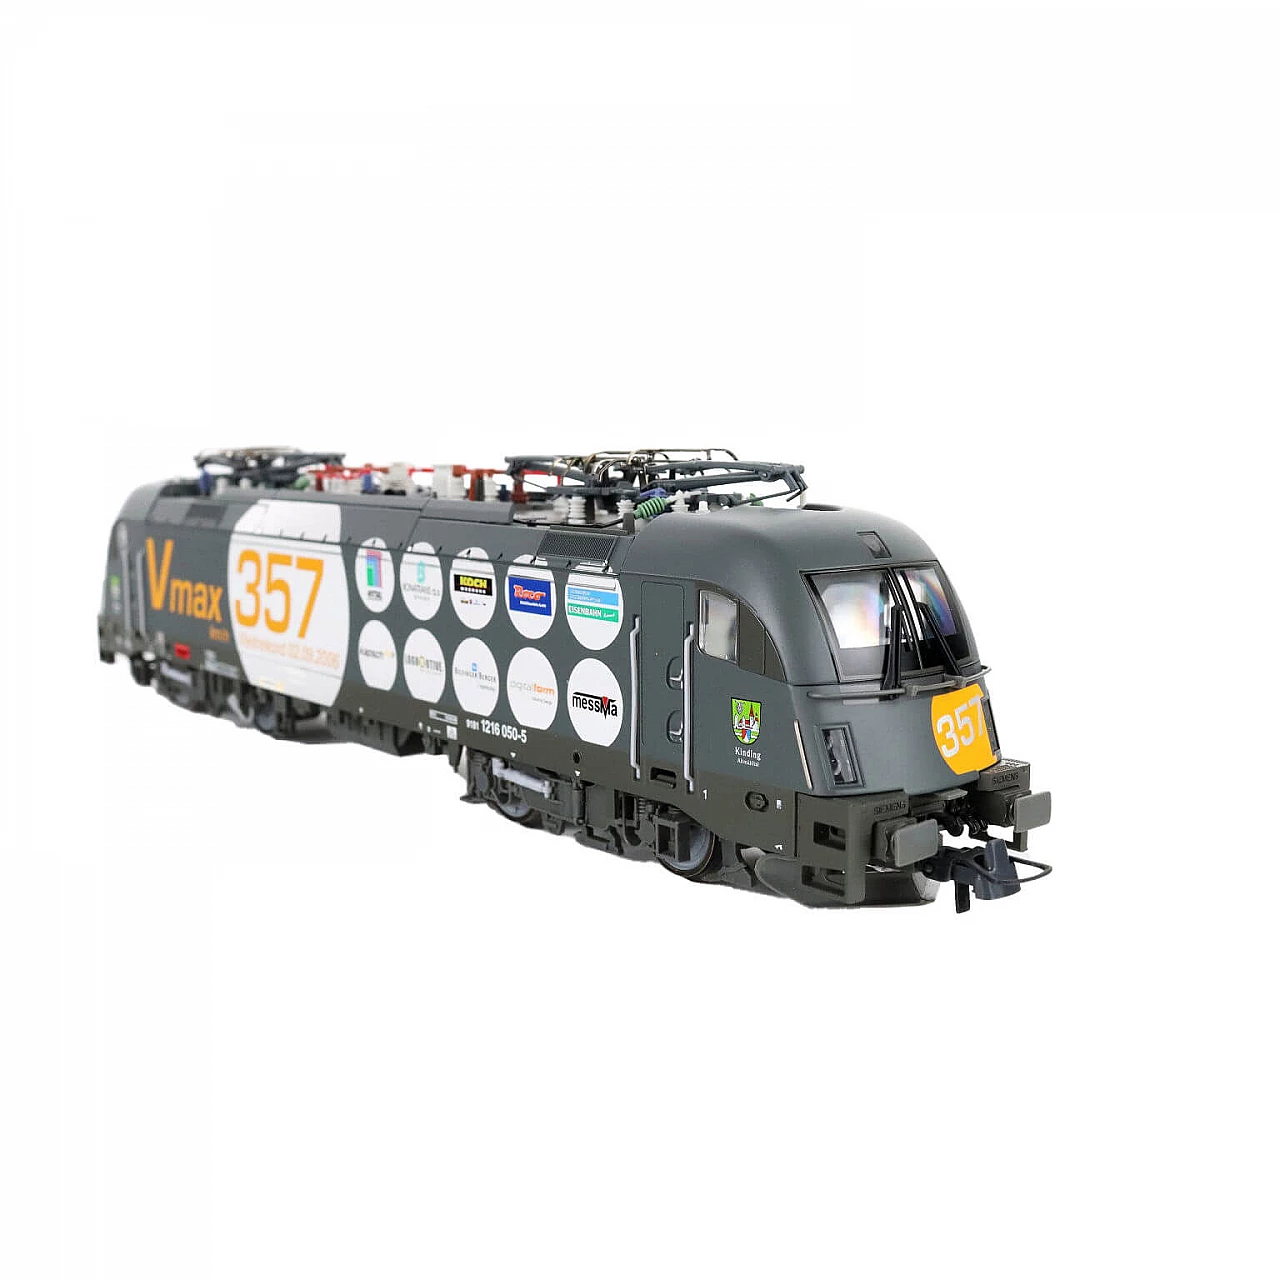 Roco locomotive 62485 series 1216 050-5 in original box 1